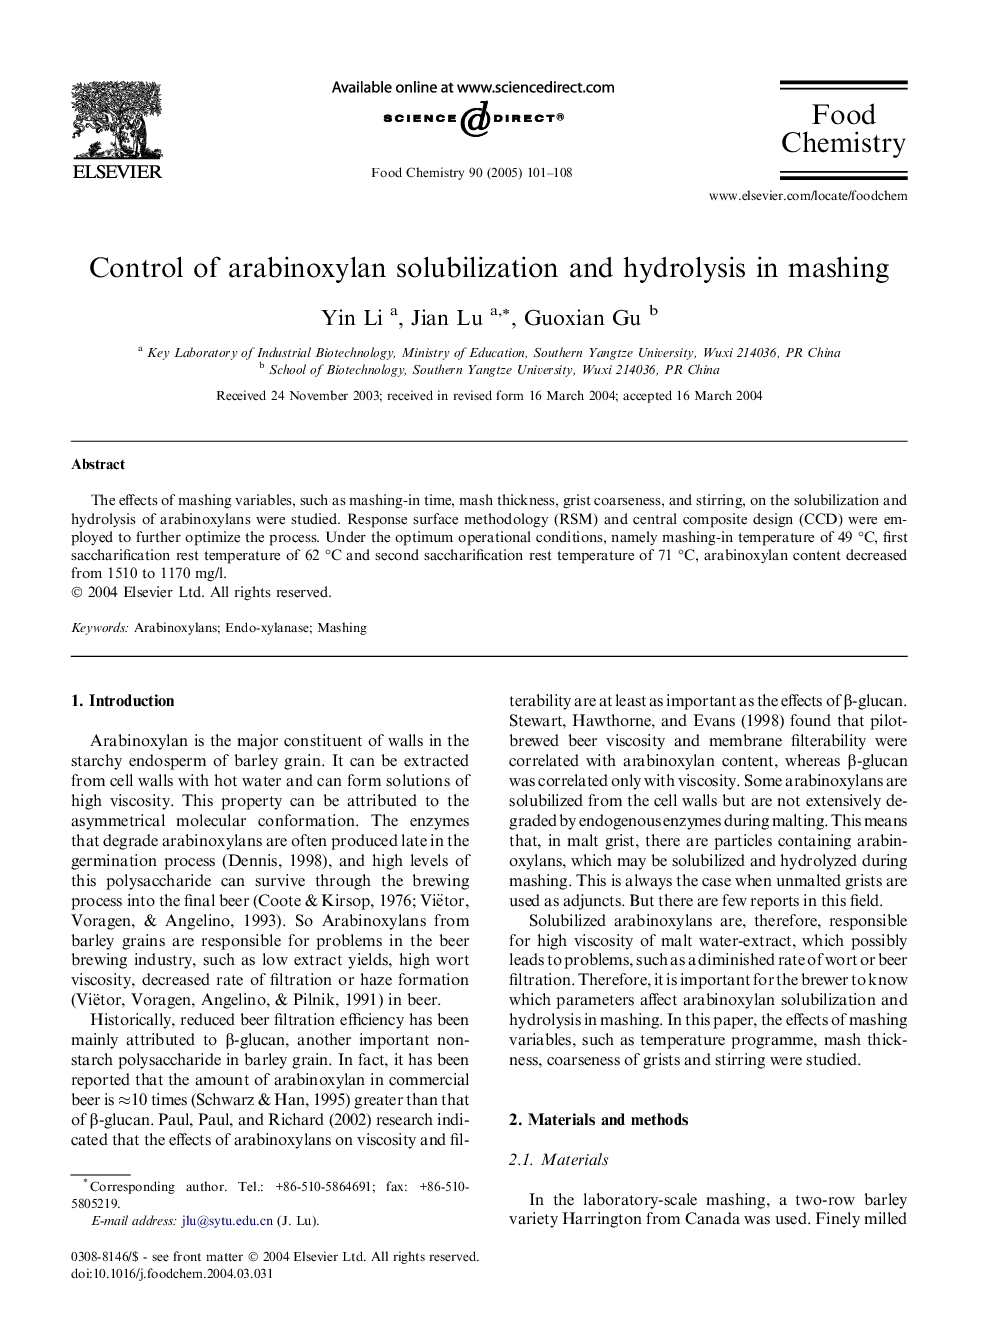 Control of arabinoxylan solubilization and hydrolysis in mashing